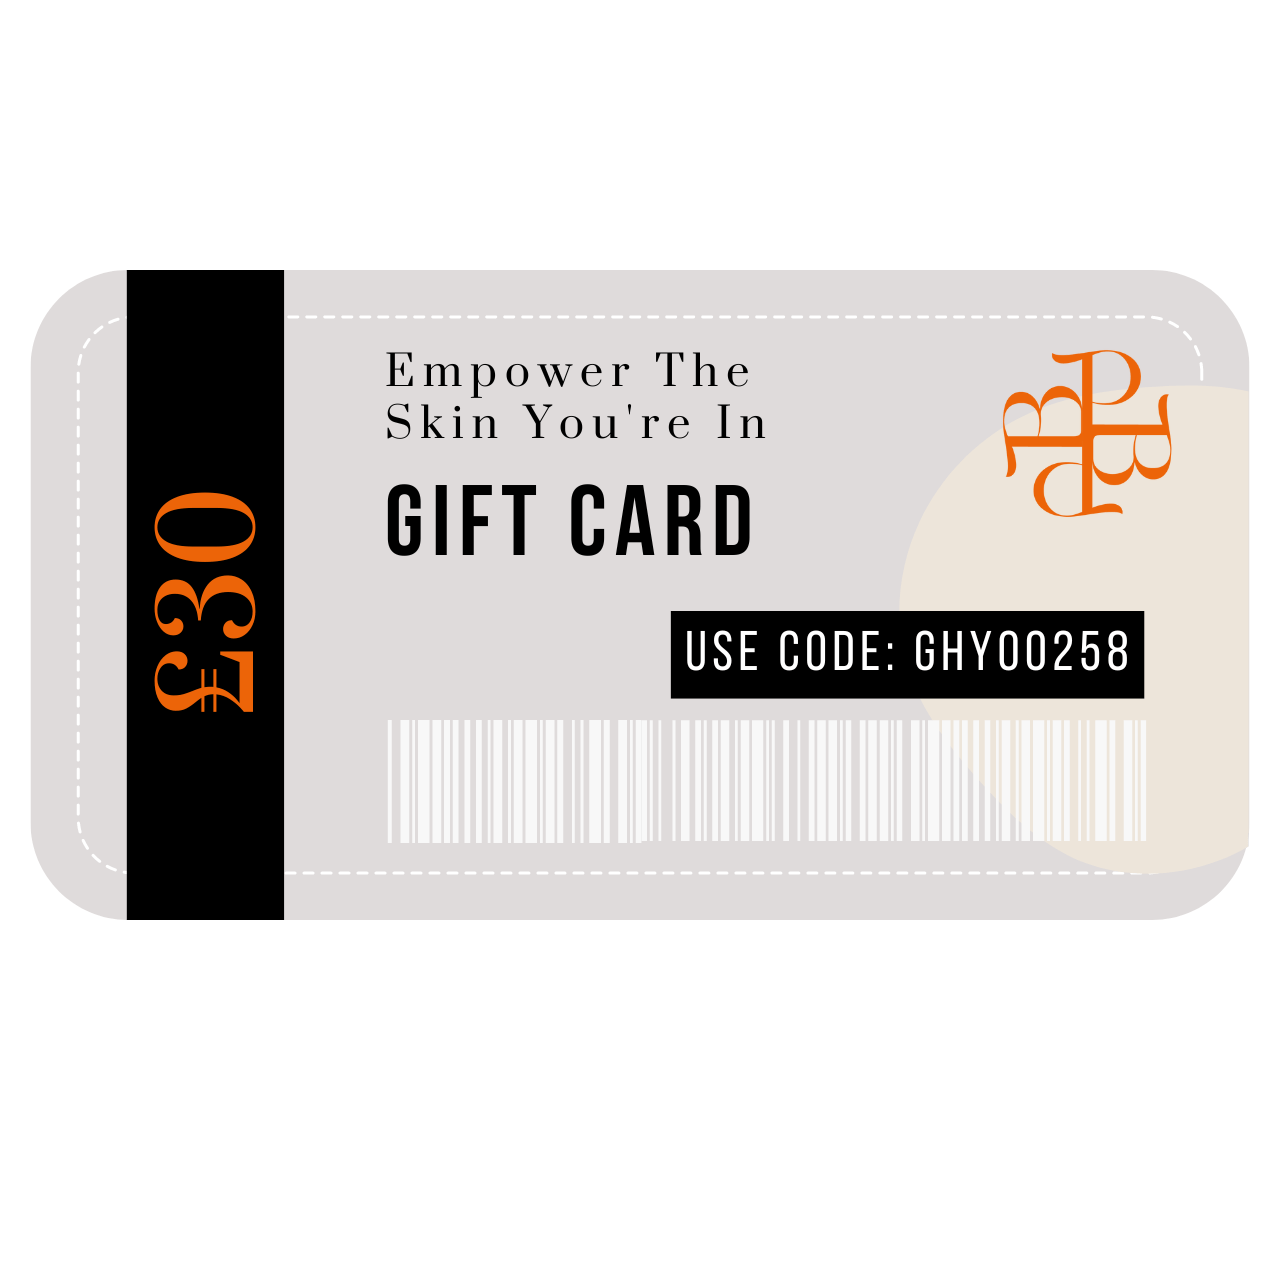 £30 Gift Card